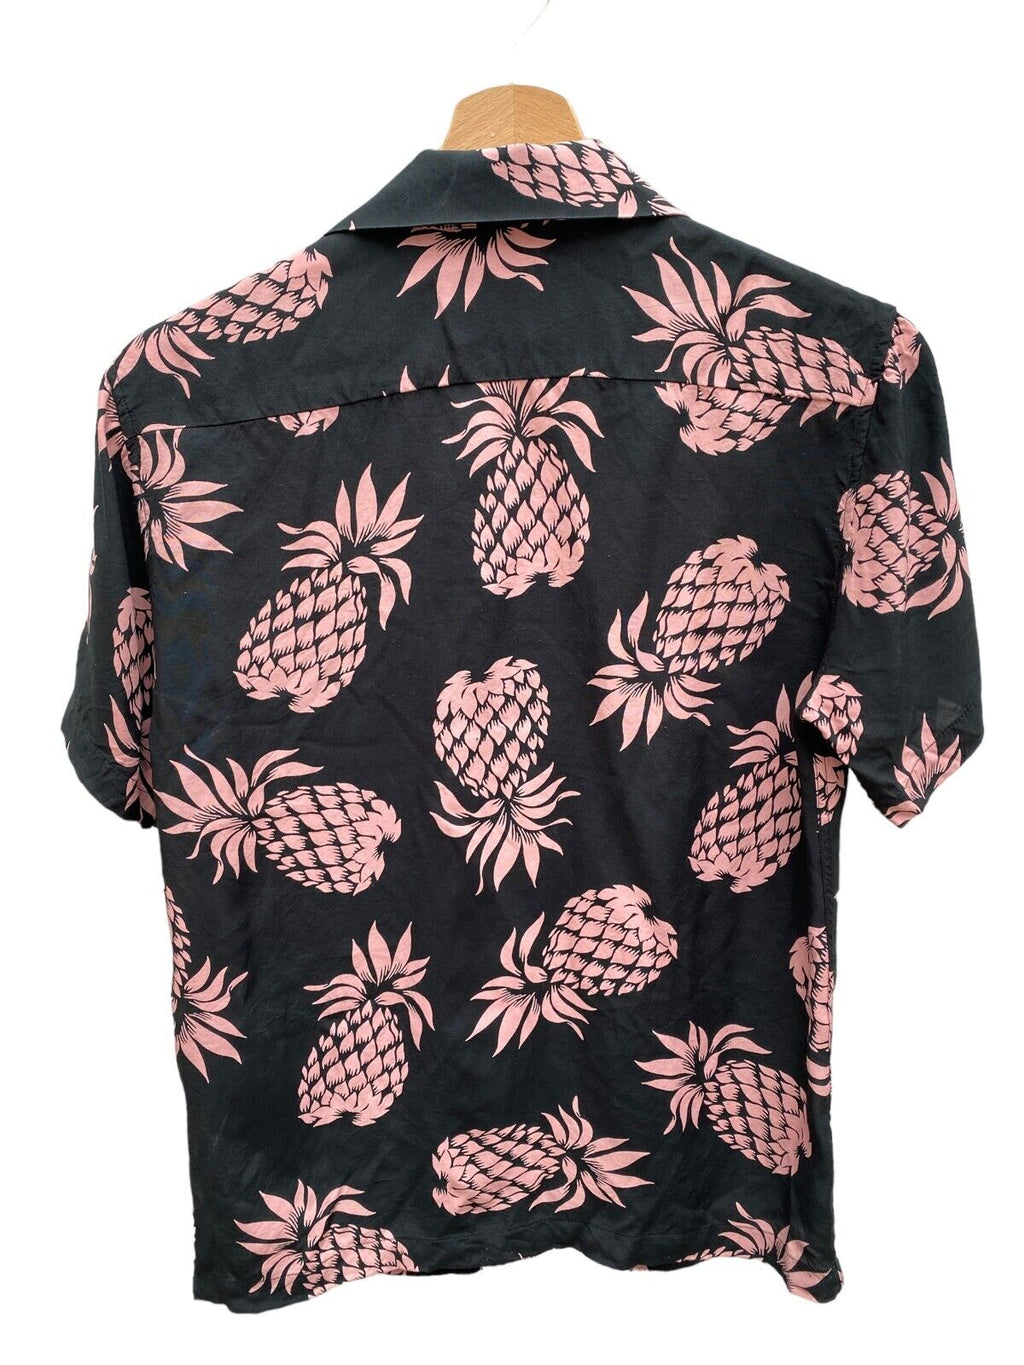 Sandro Black / Pink Hawaiian Floral Short Sleeves Shirt Size XS Extra Small